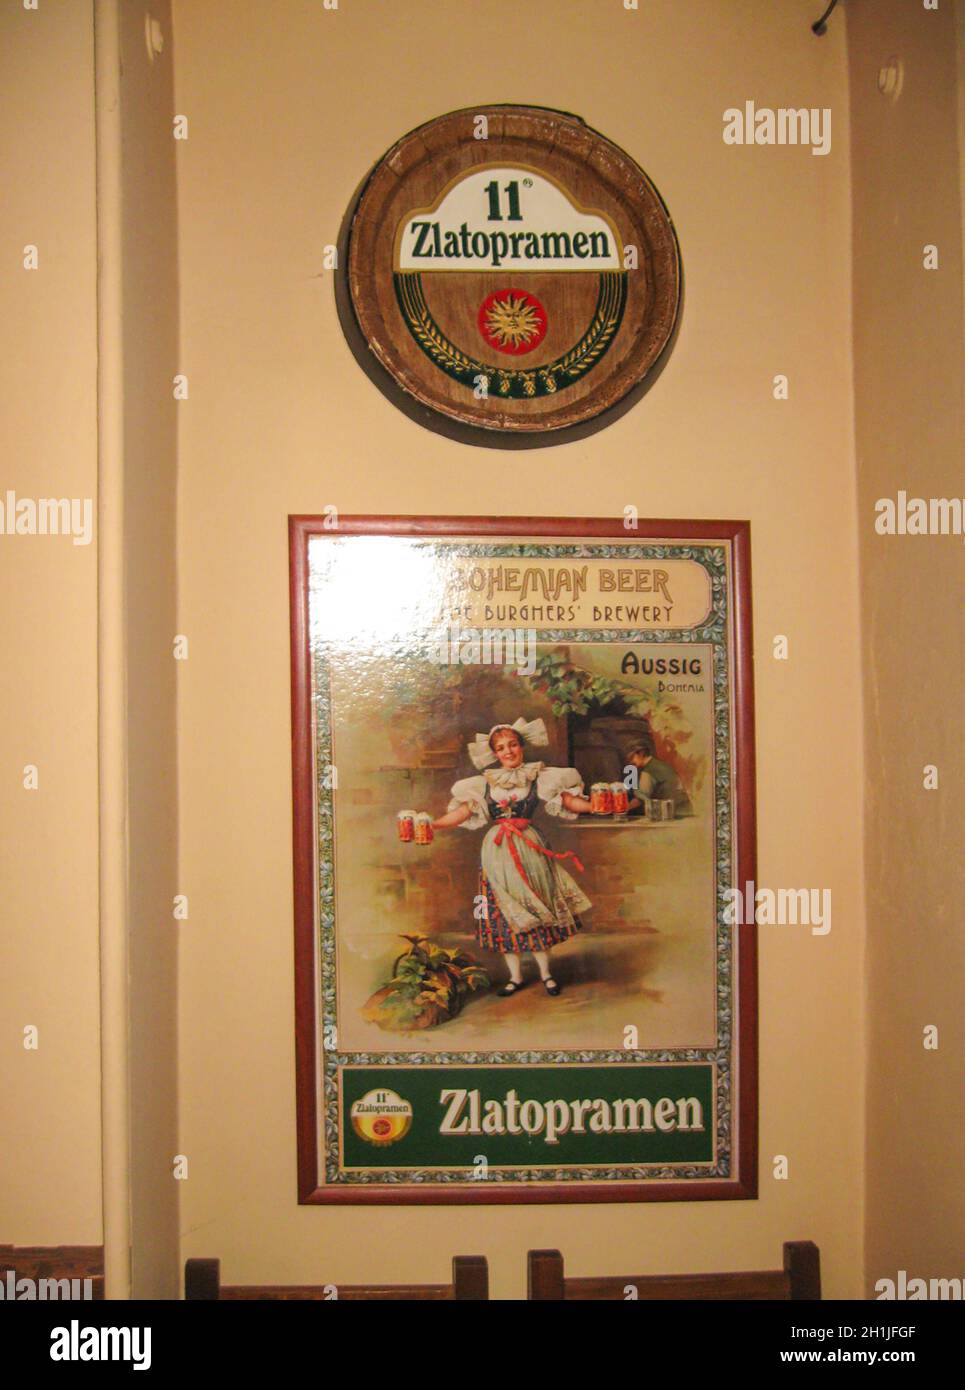 Prague, Czech Republic - June 26, 2010: The Zlatopramen logo of beer at Narodni Restaurant at Prague, Czech Republic on June 26, 2010. Stock Photo